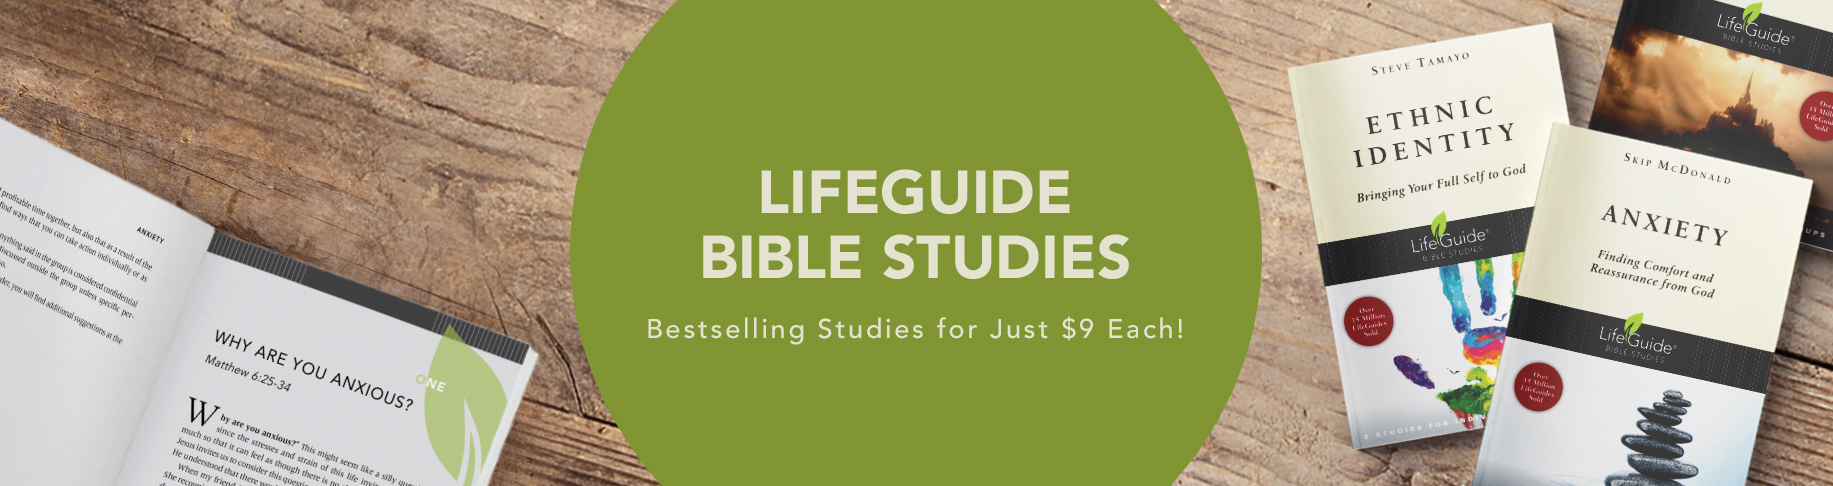 LifeGuide Bible Studies - Bestselling Studies for Just $9 Each